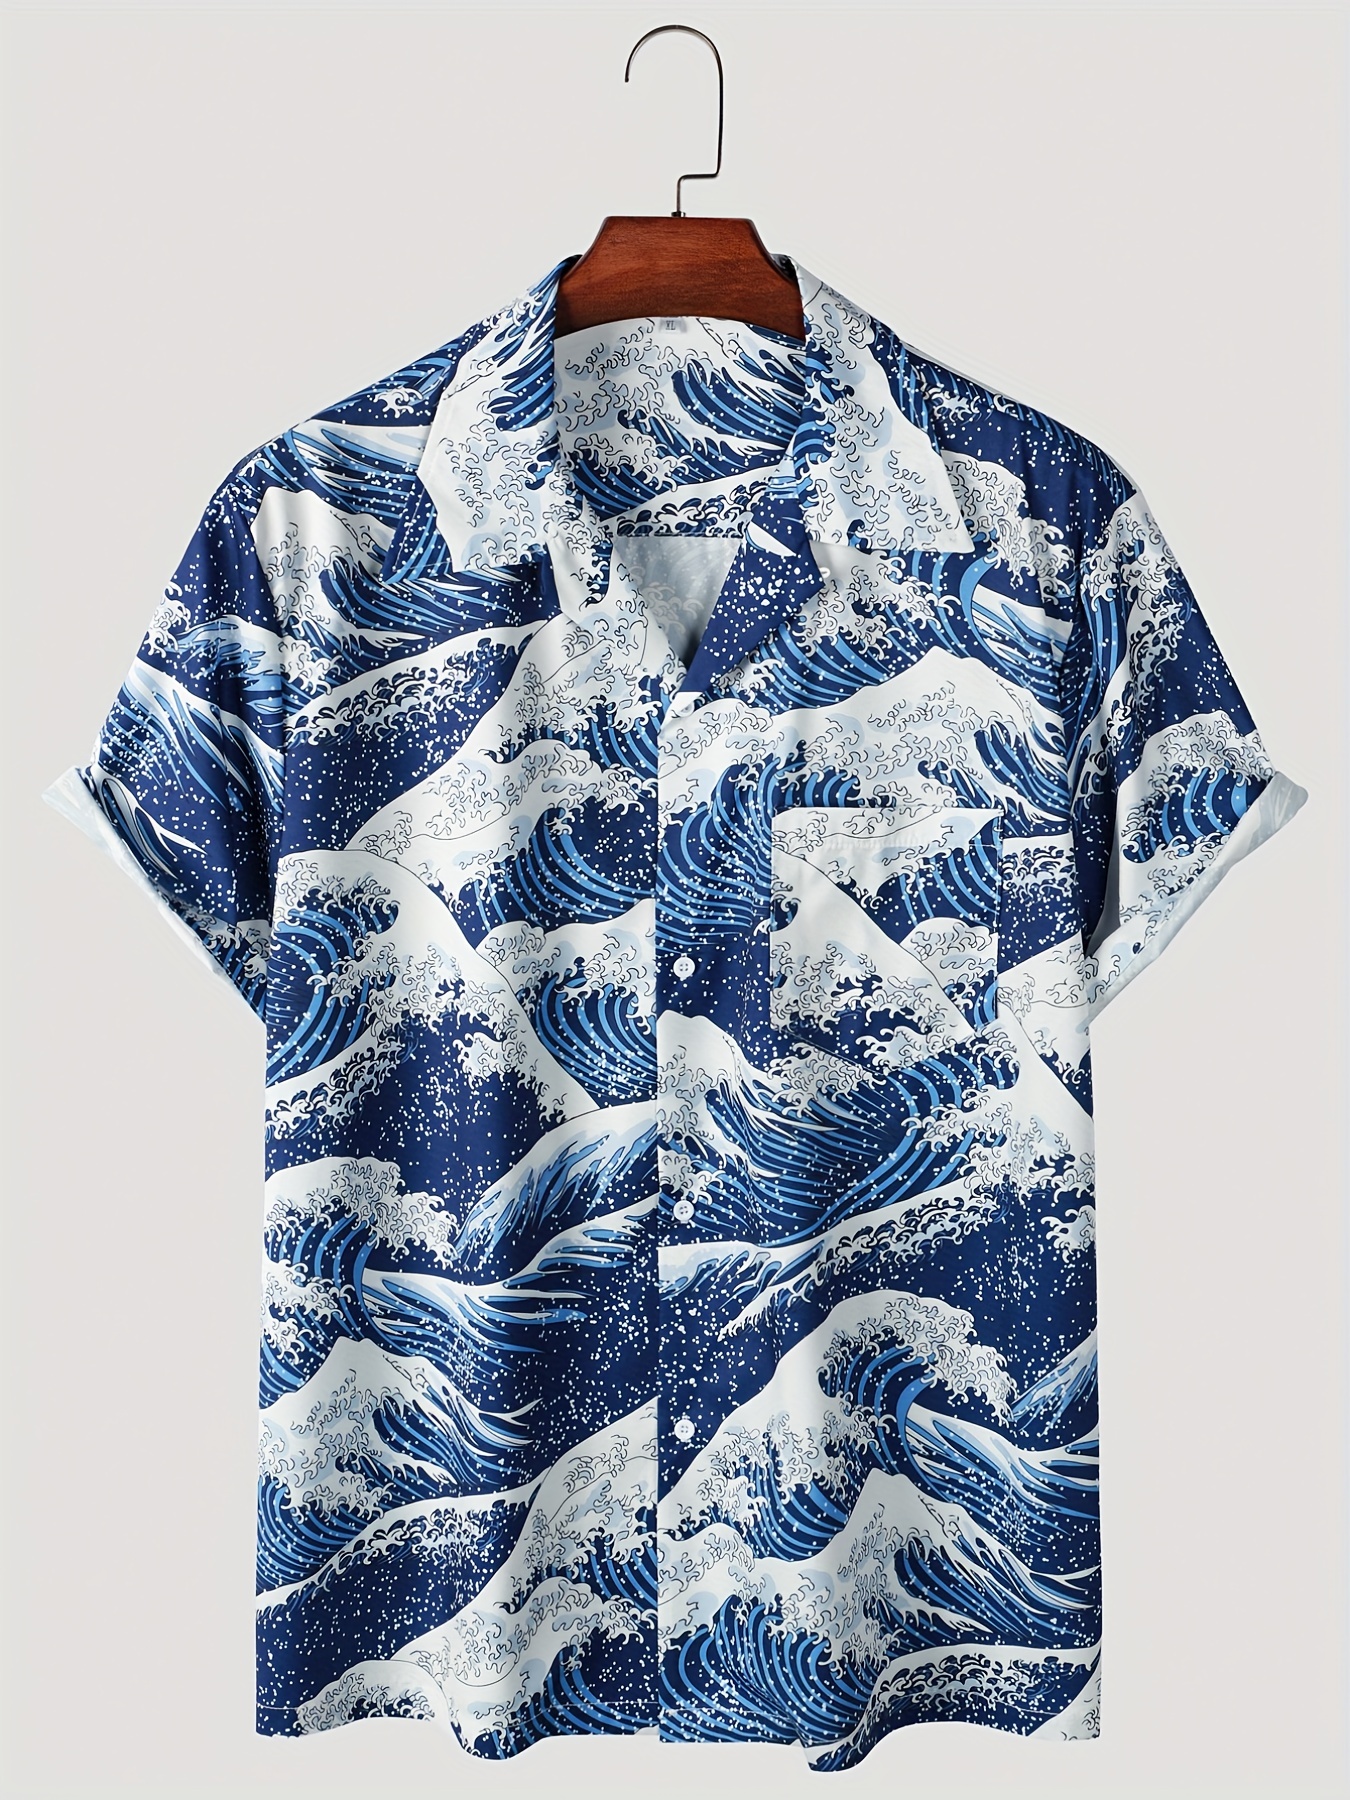 15 Chic Hawaiian Shirt Outfits